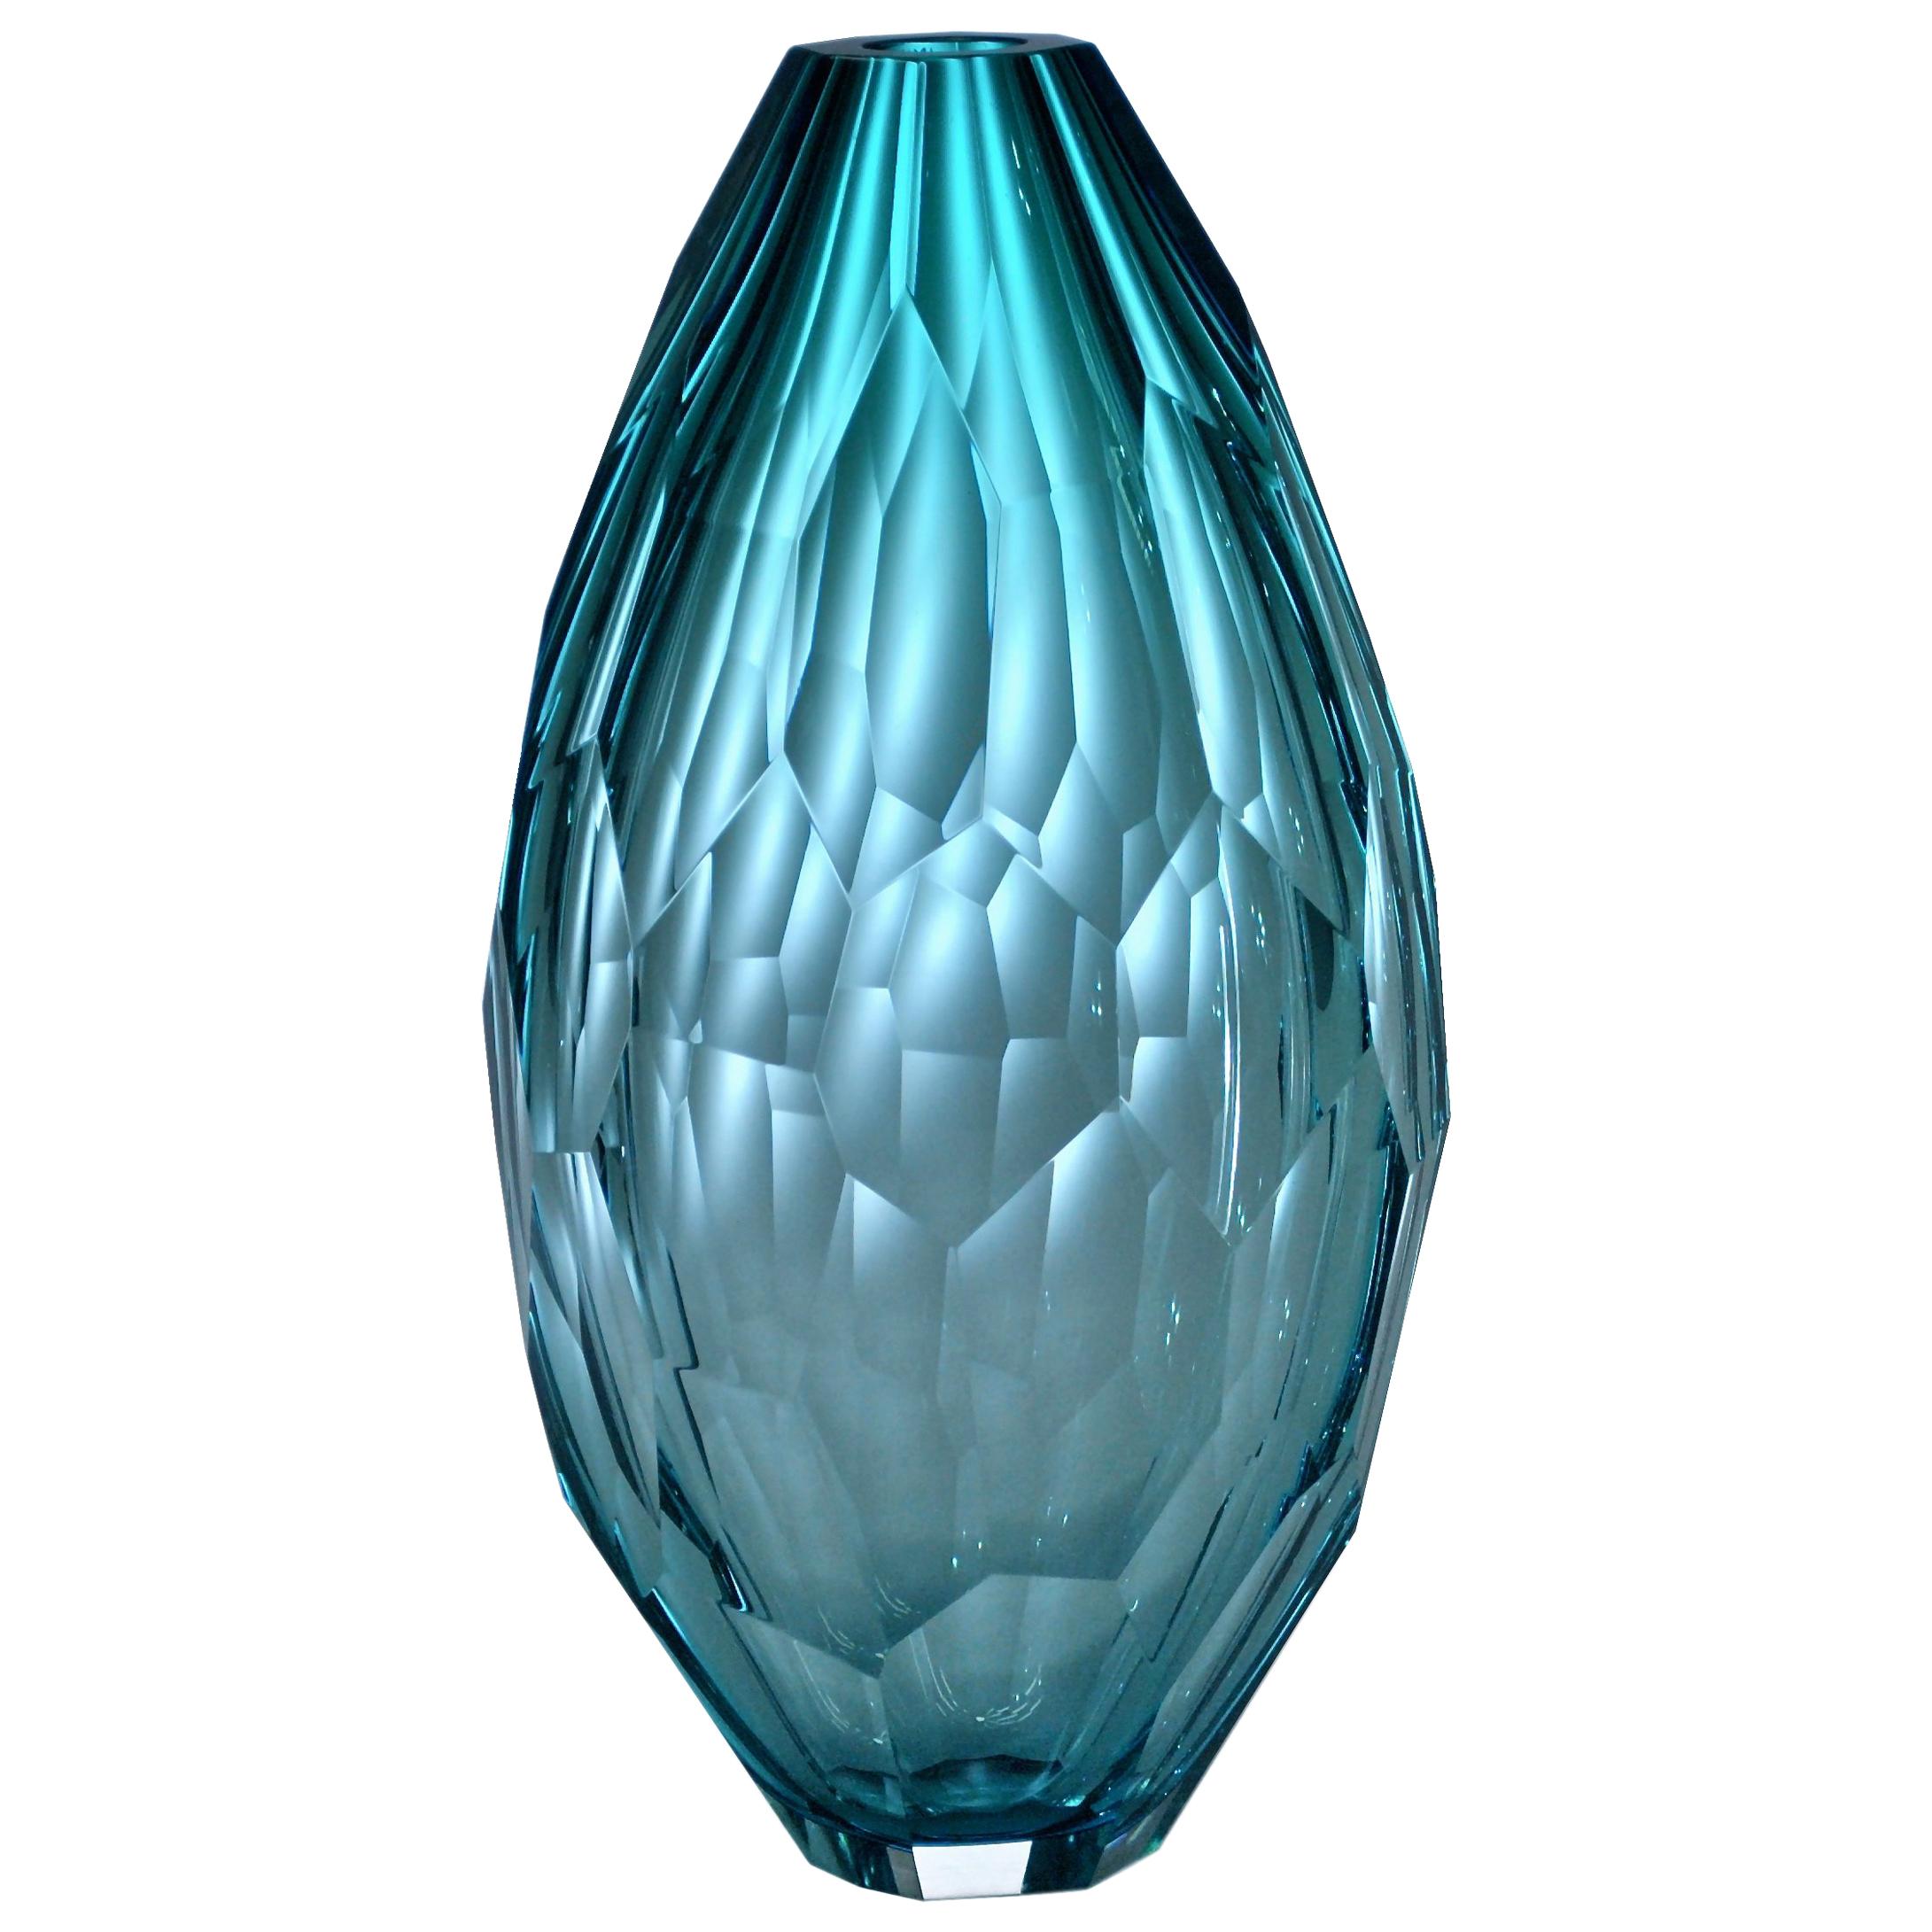 Arcade Murano Art Glass Vase "Euro Acquamarine" Design by Ivan Baj For Sale